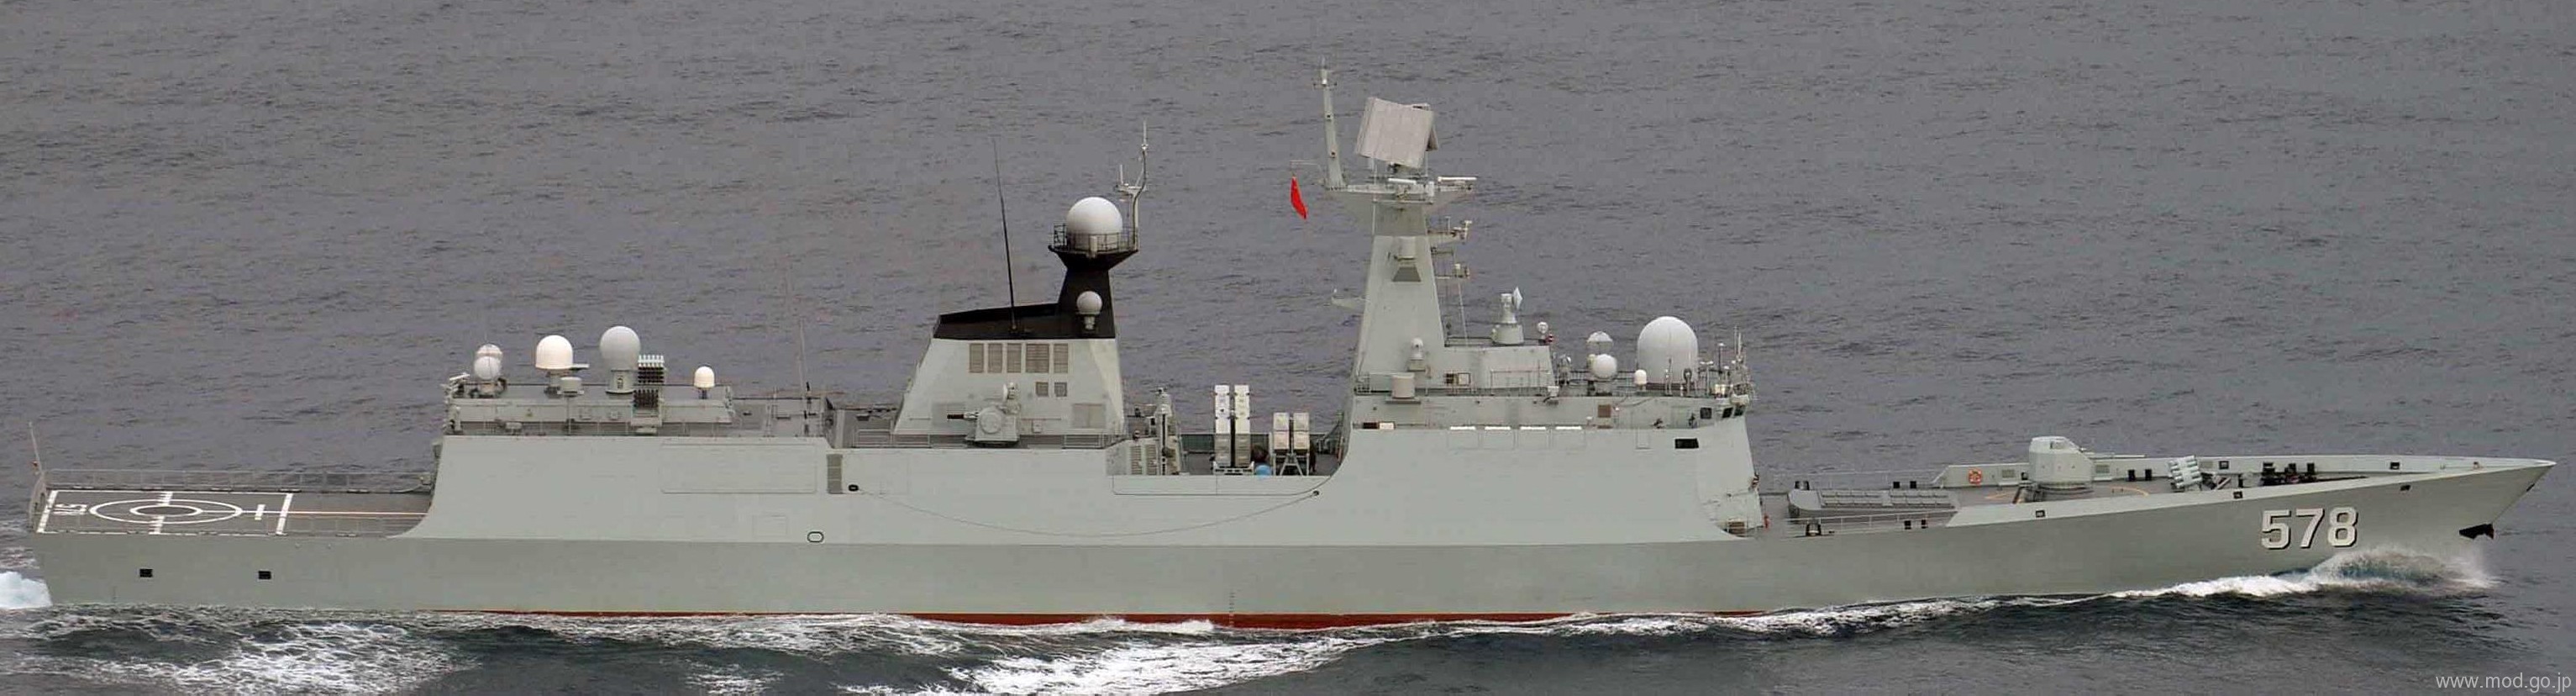 ffg-578 plans yangzhou type 054a jiangkai ii class guided missile frigate china people's liberation army navy 03